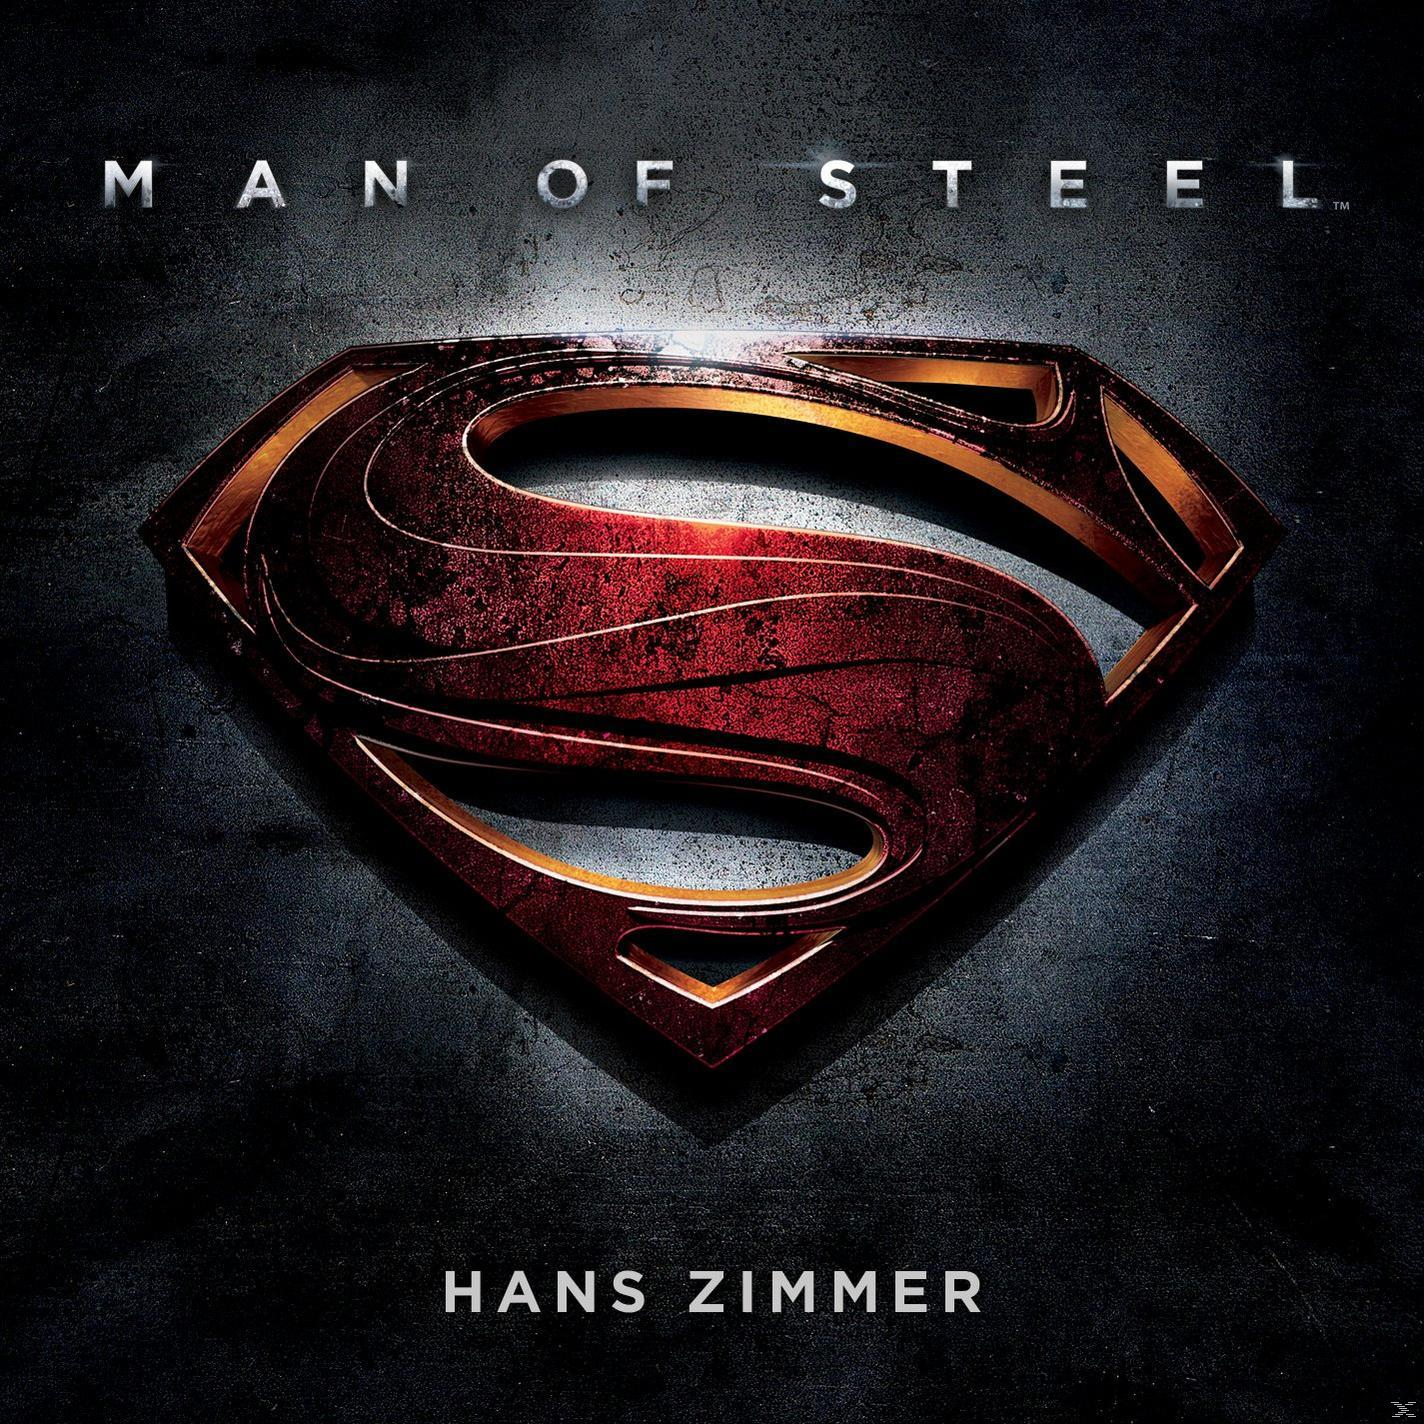 Of - Steel Zimmer Man - Hans (CD)